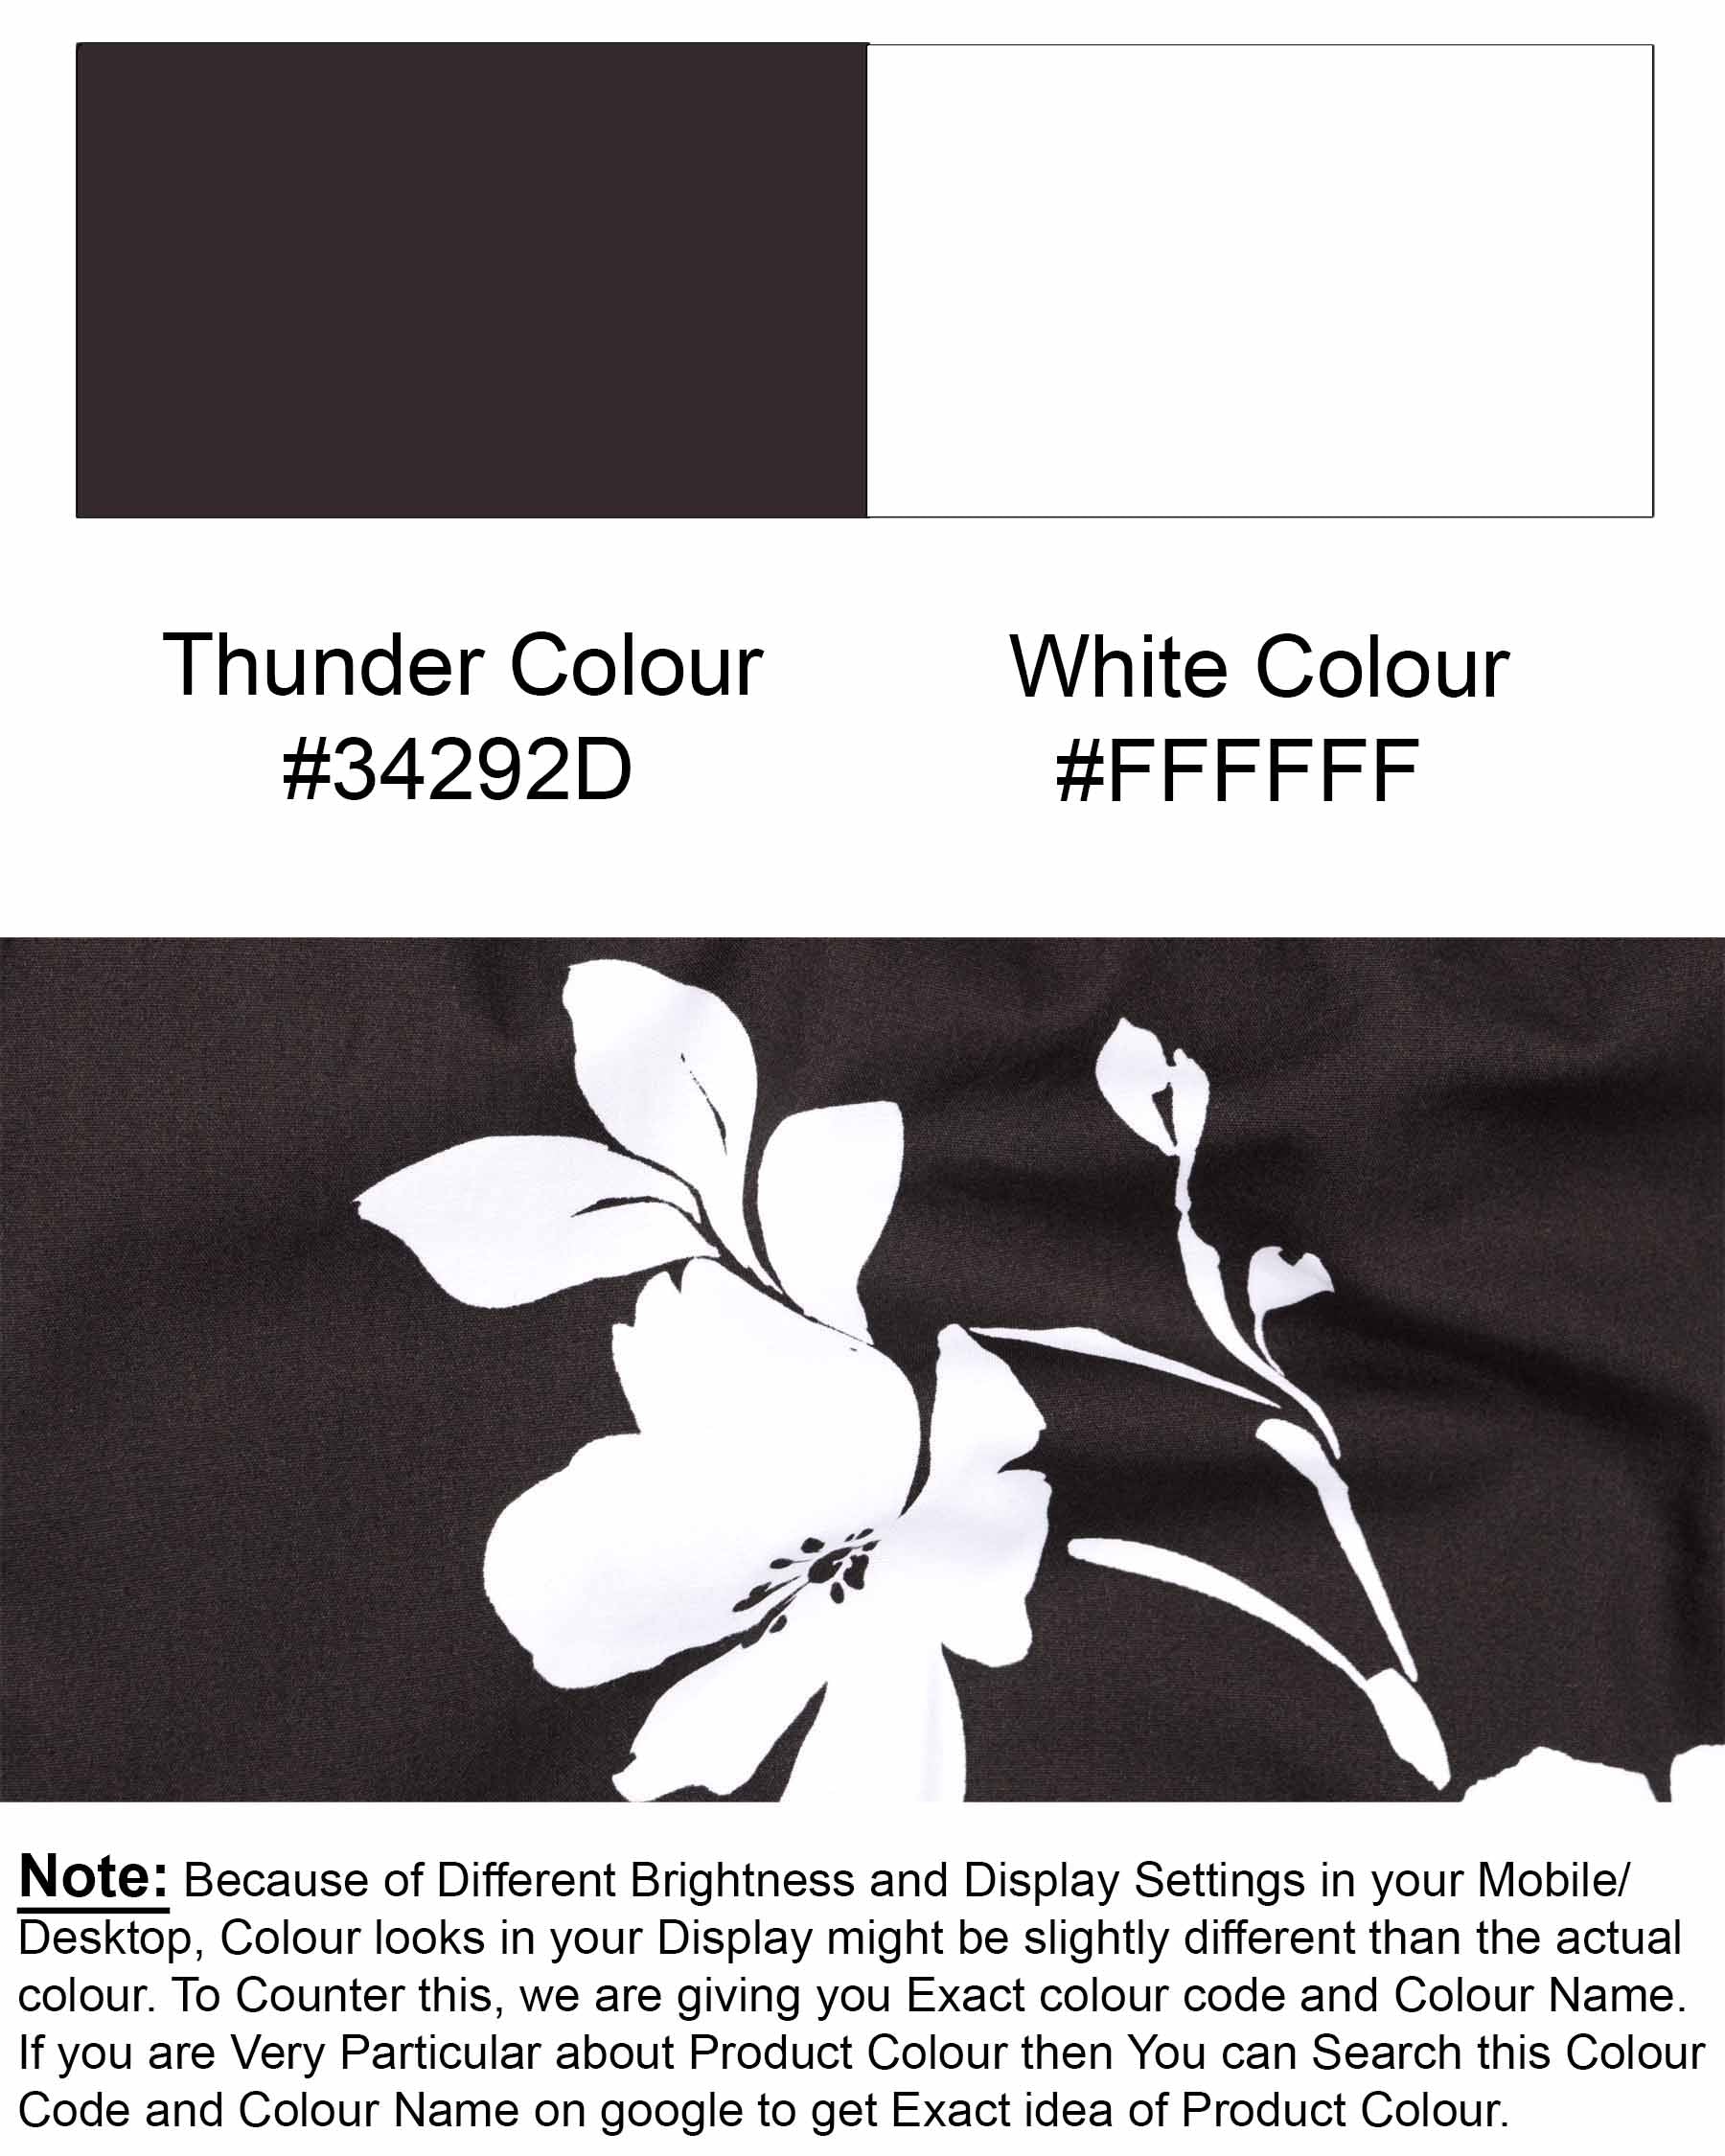 Thunder Brown Floral Printed Premium Cotton Shirt 6630-BLK-38,6630-BLK-H-38,6630-BLK-39,6630-BLK-H-39,6630-BLK-40,6630-BLK-H-40,6630-BLK-42,6630-BLK-H-42,6630-BLK-44,6630-BLK-H-44,6630-BLK-46,6630-BLK-H-46,6630-BLK-48,6630-BLK-H-48,6630-BLK-50,6630-BLK-H-50,6630-BLK-52,6630-BLK-H-52